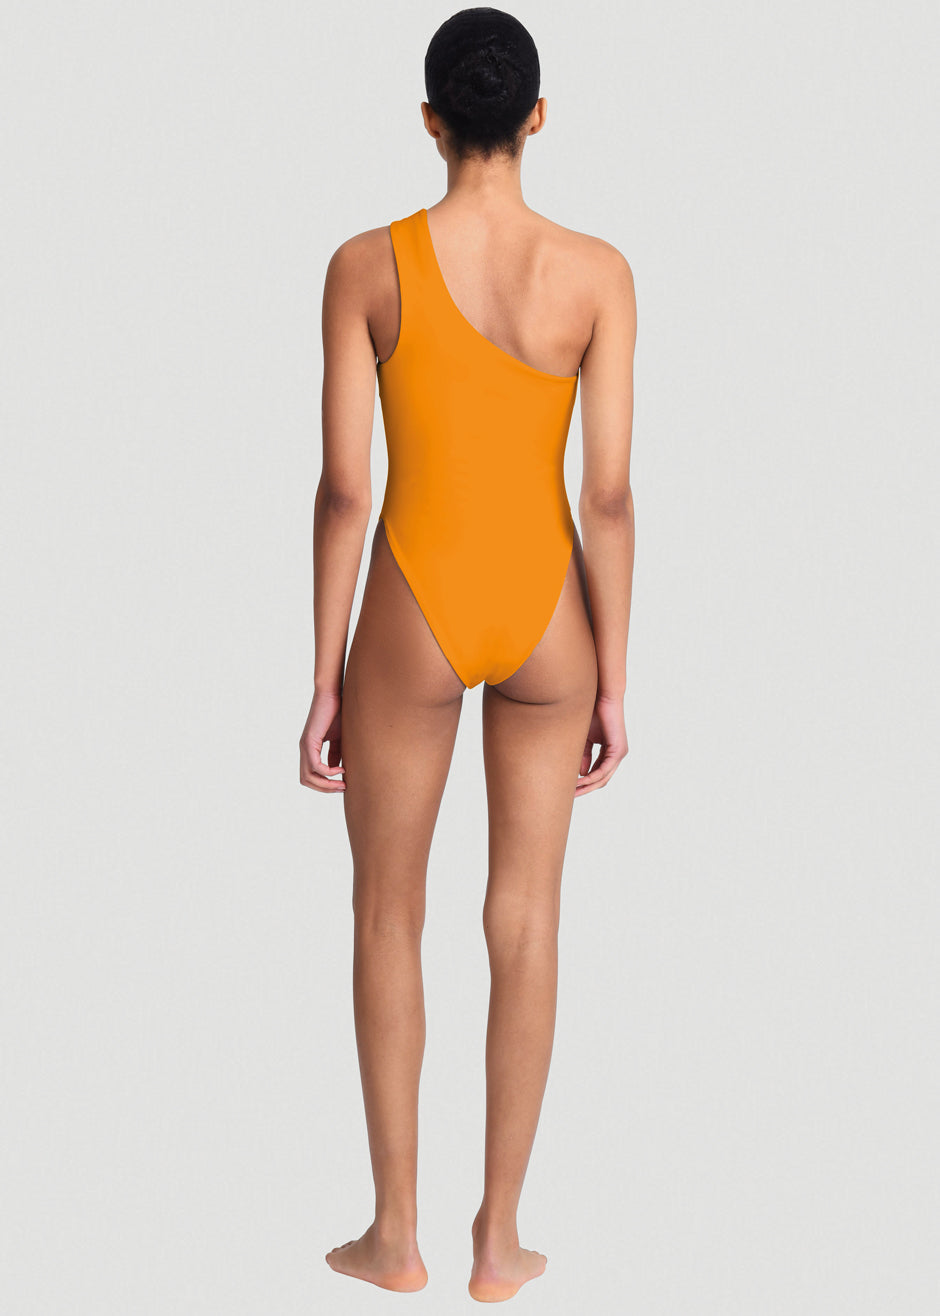 Aexae Knot One Piece Swimsuit - Orange - 1